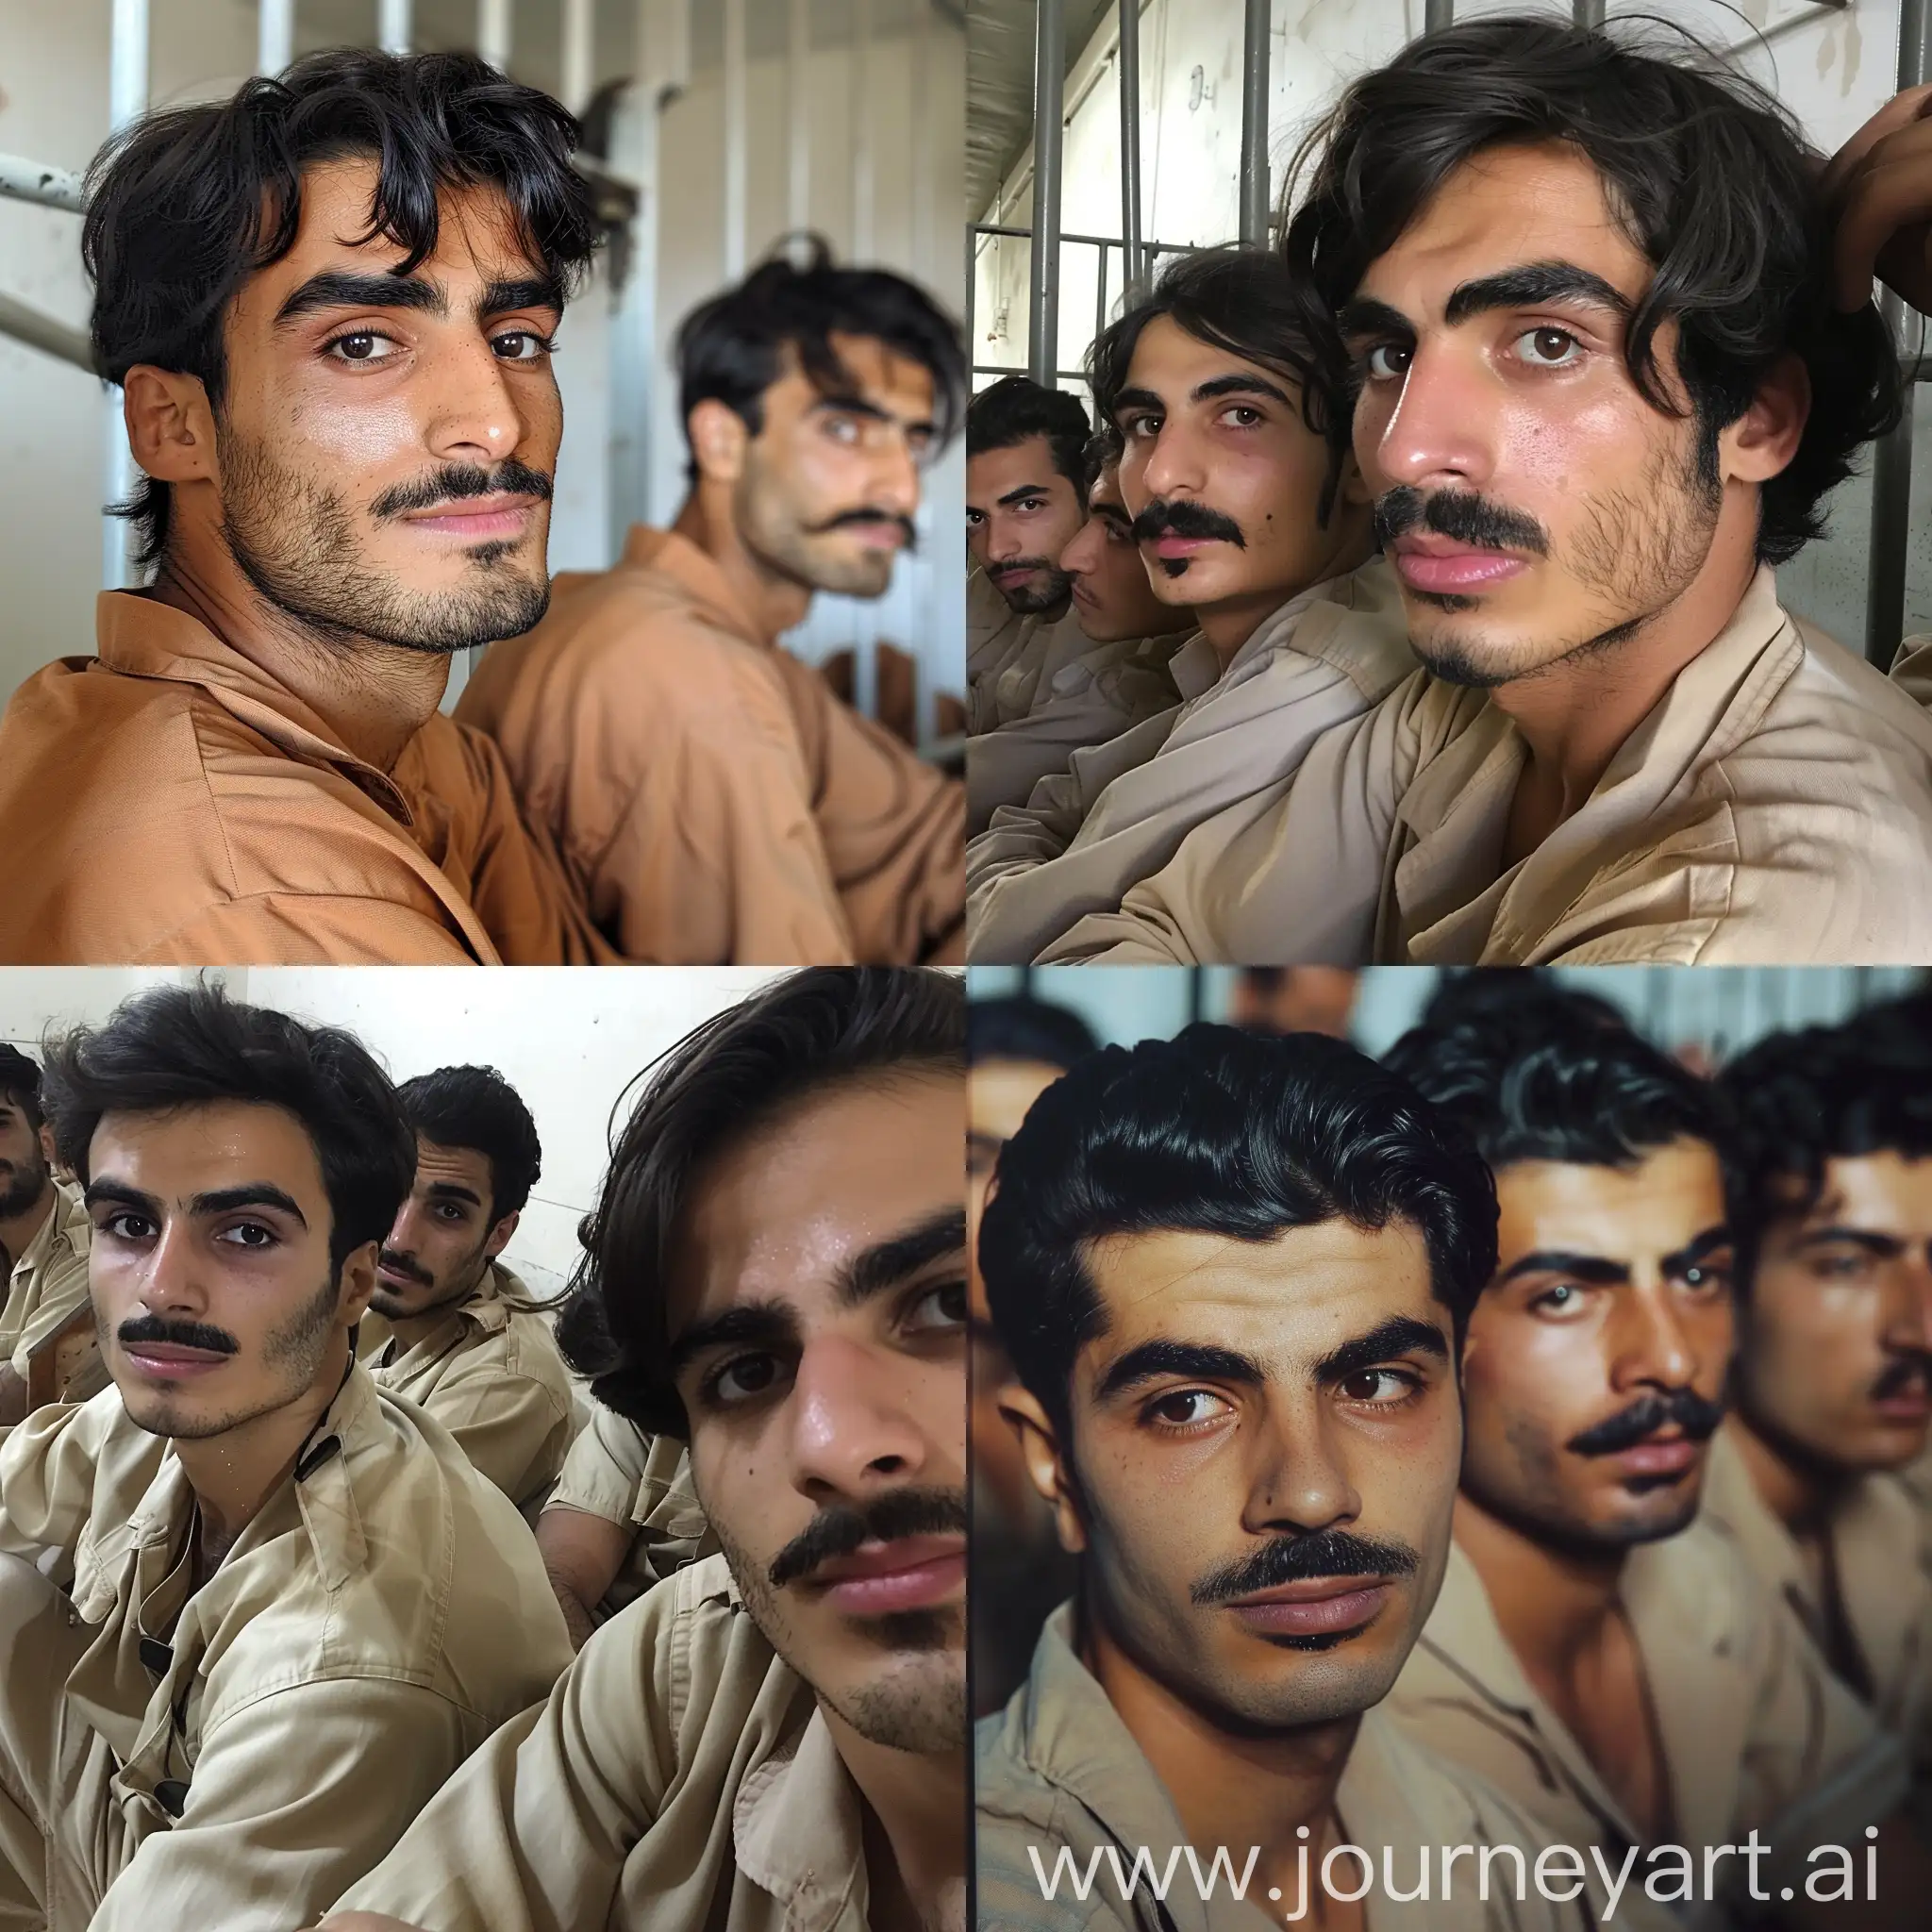 Tan-Iranian-Men-with-Mustaches-Sitting-in-Dubai-Prison